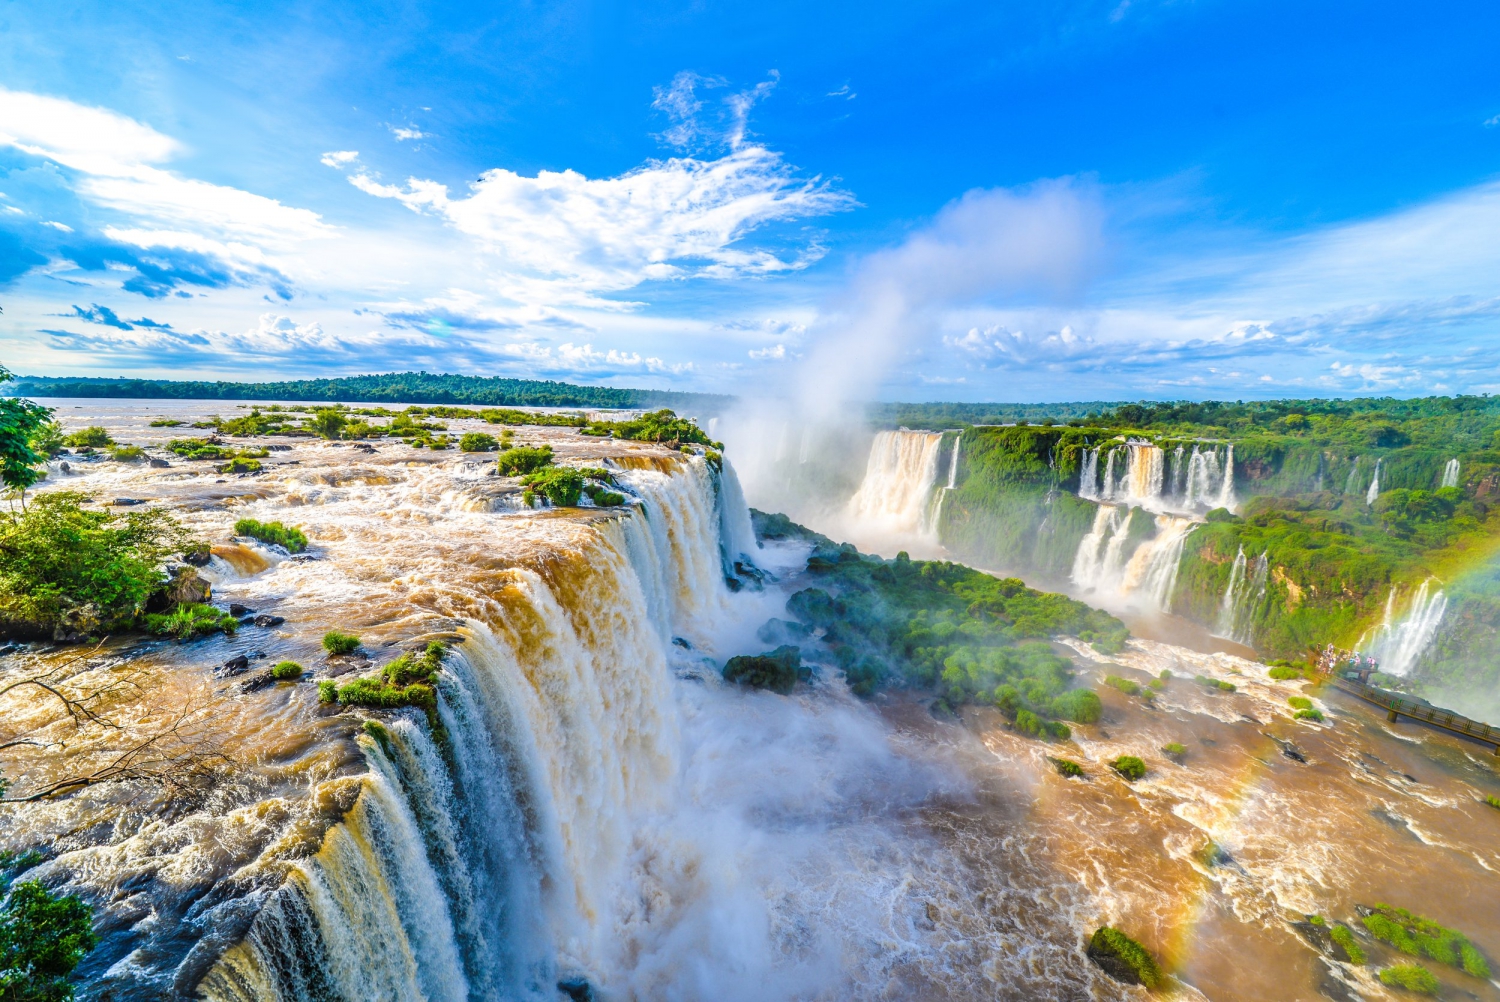 Iguazu Falls Brazil side vs Argentina side